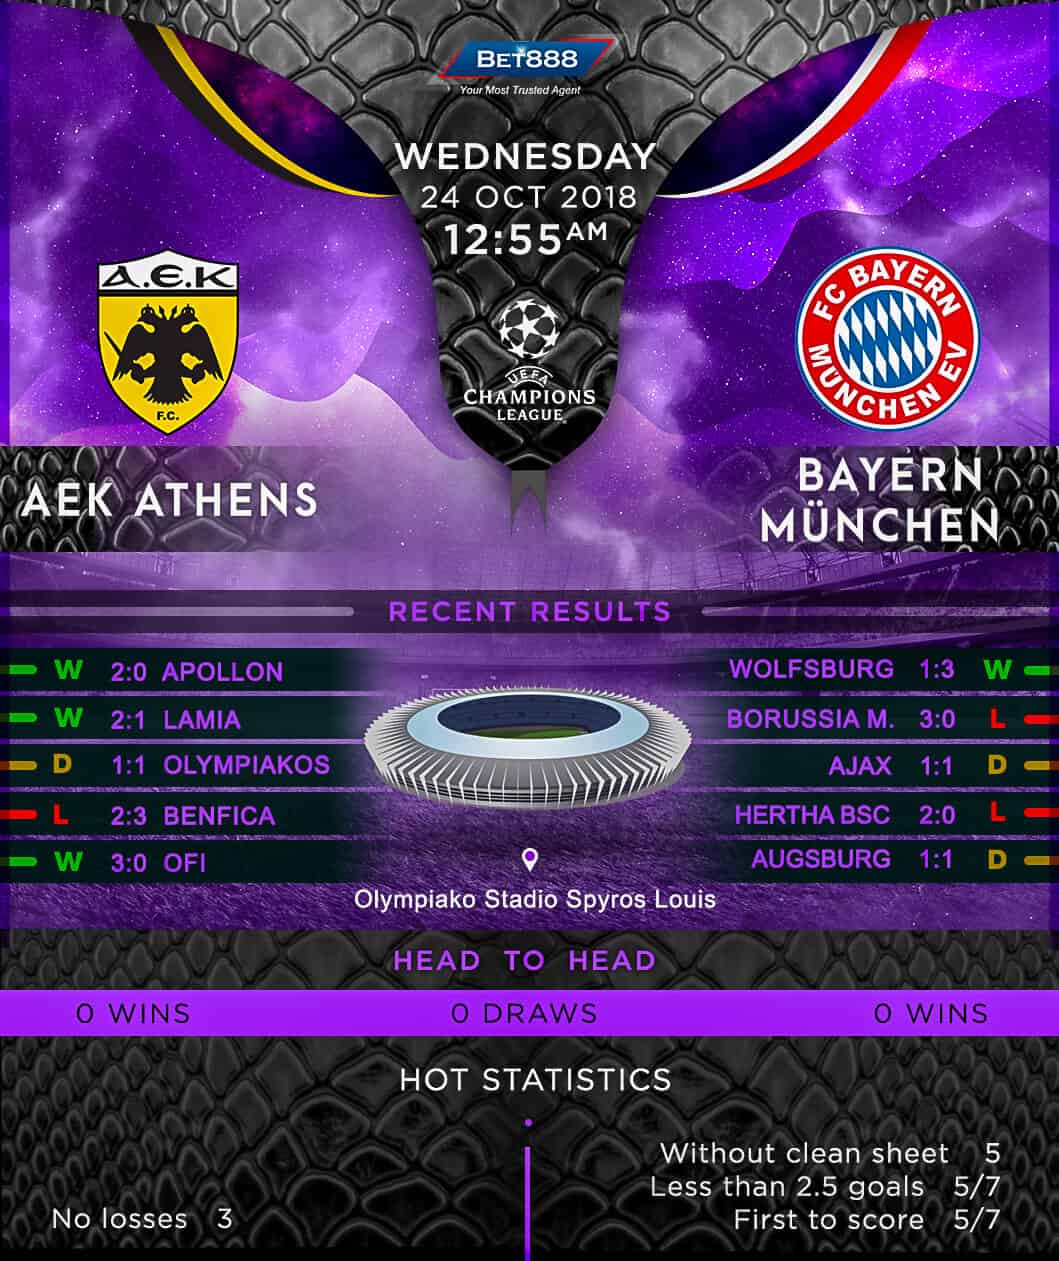 AEK Athens vs Bayern Munich 24/10/18